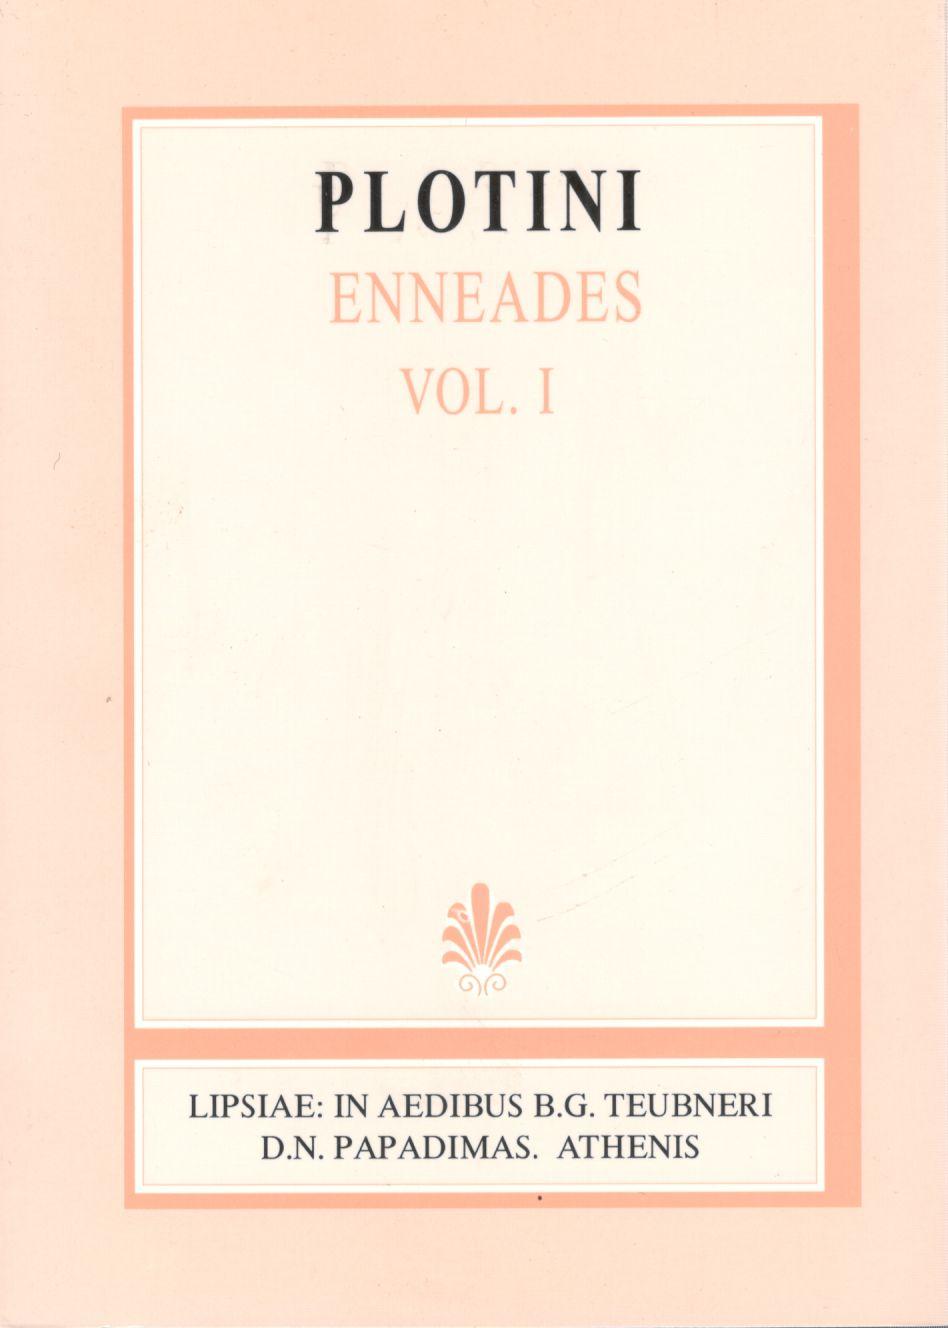 Plotini, Enneades, Vol. I, [Πλωτίνου, Εννεάδες, τ. Α